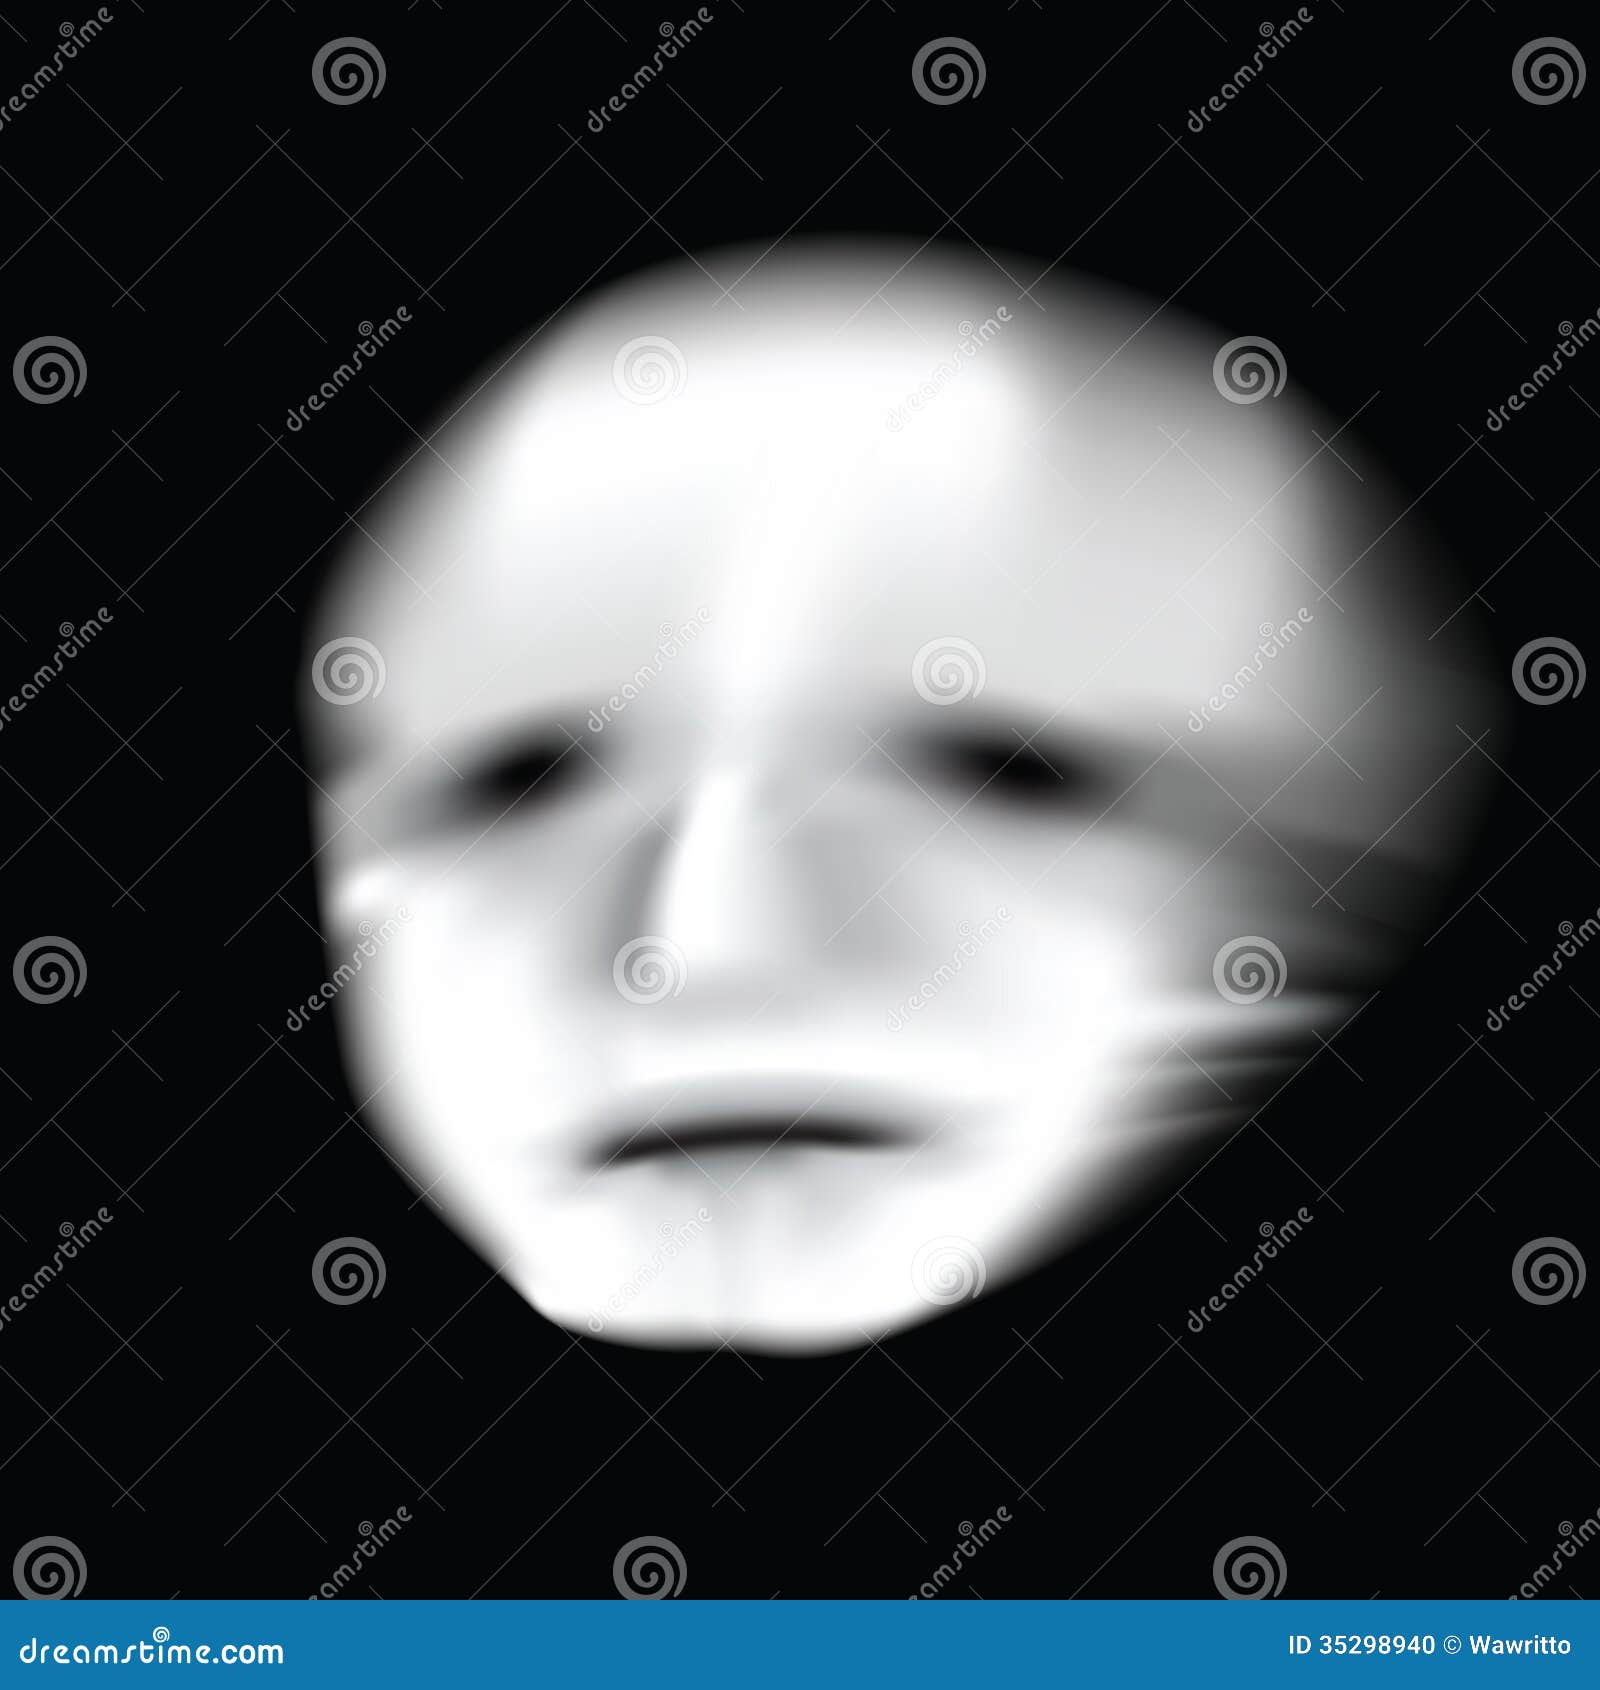 ghost-alien-face-illustration-35298940.jpg